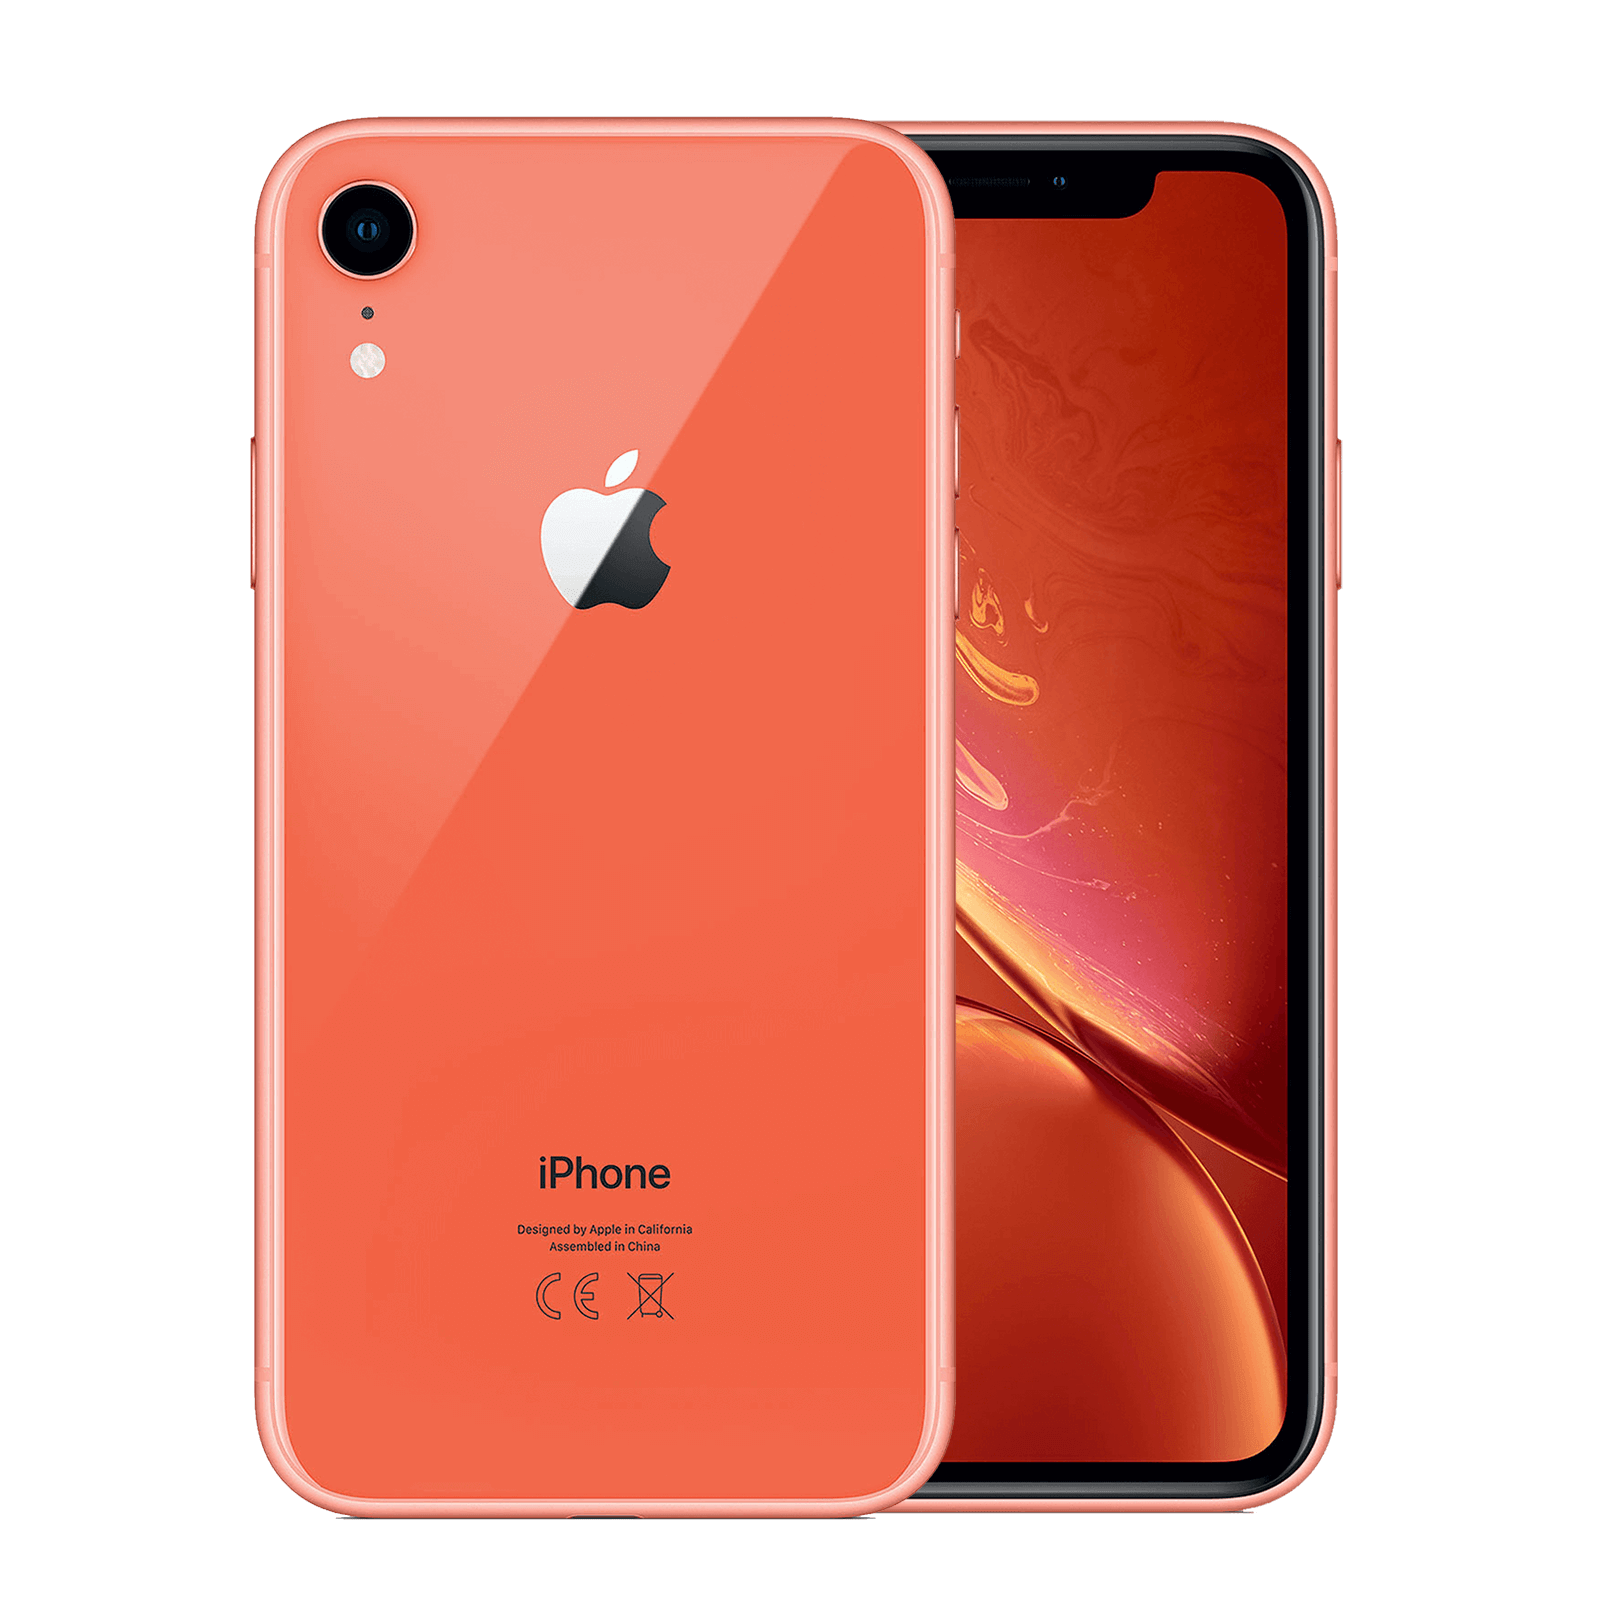 Apple iPhone XR 64GB Coral Fair - Unlocked